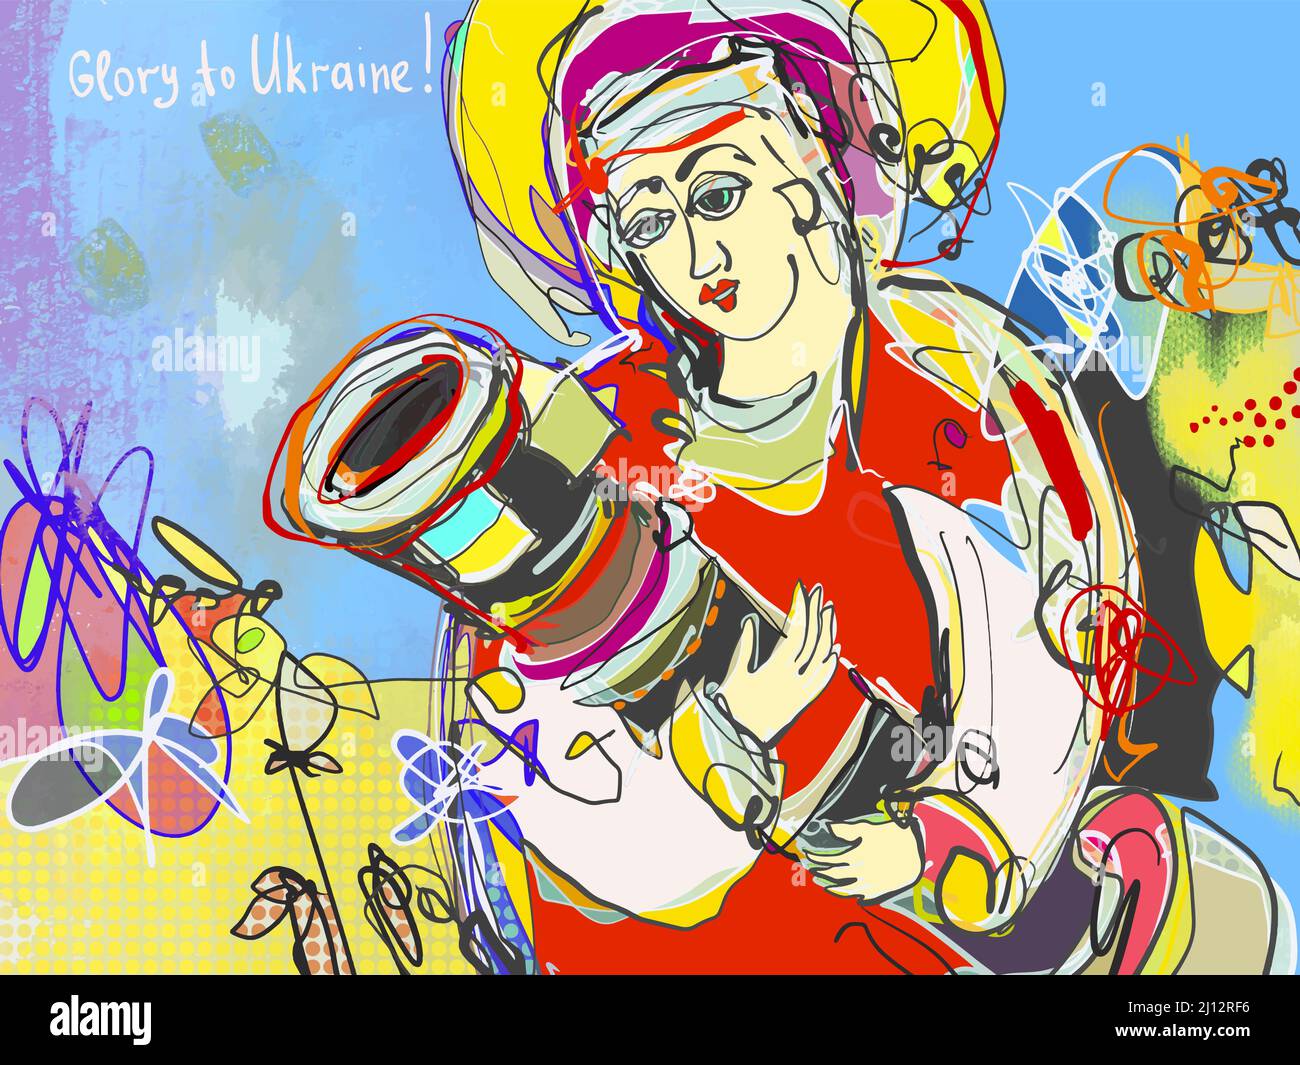 Glory to Ukraine! - digital artwork contemporary art Stock Vector